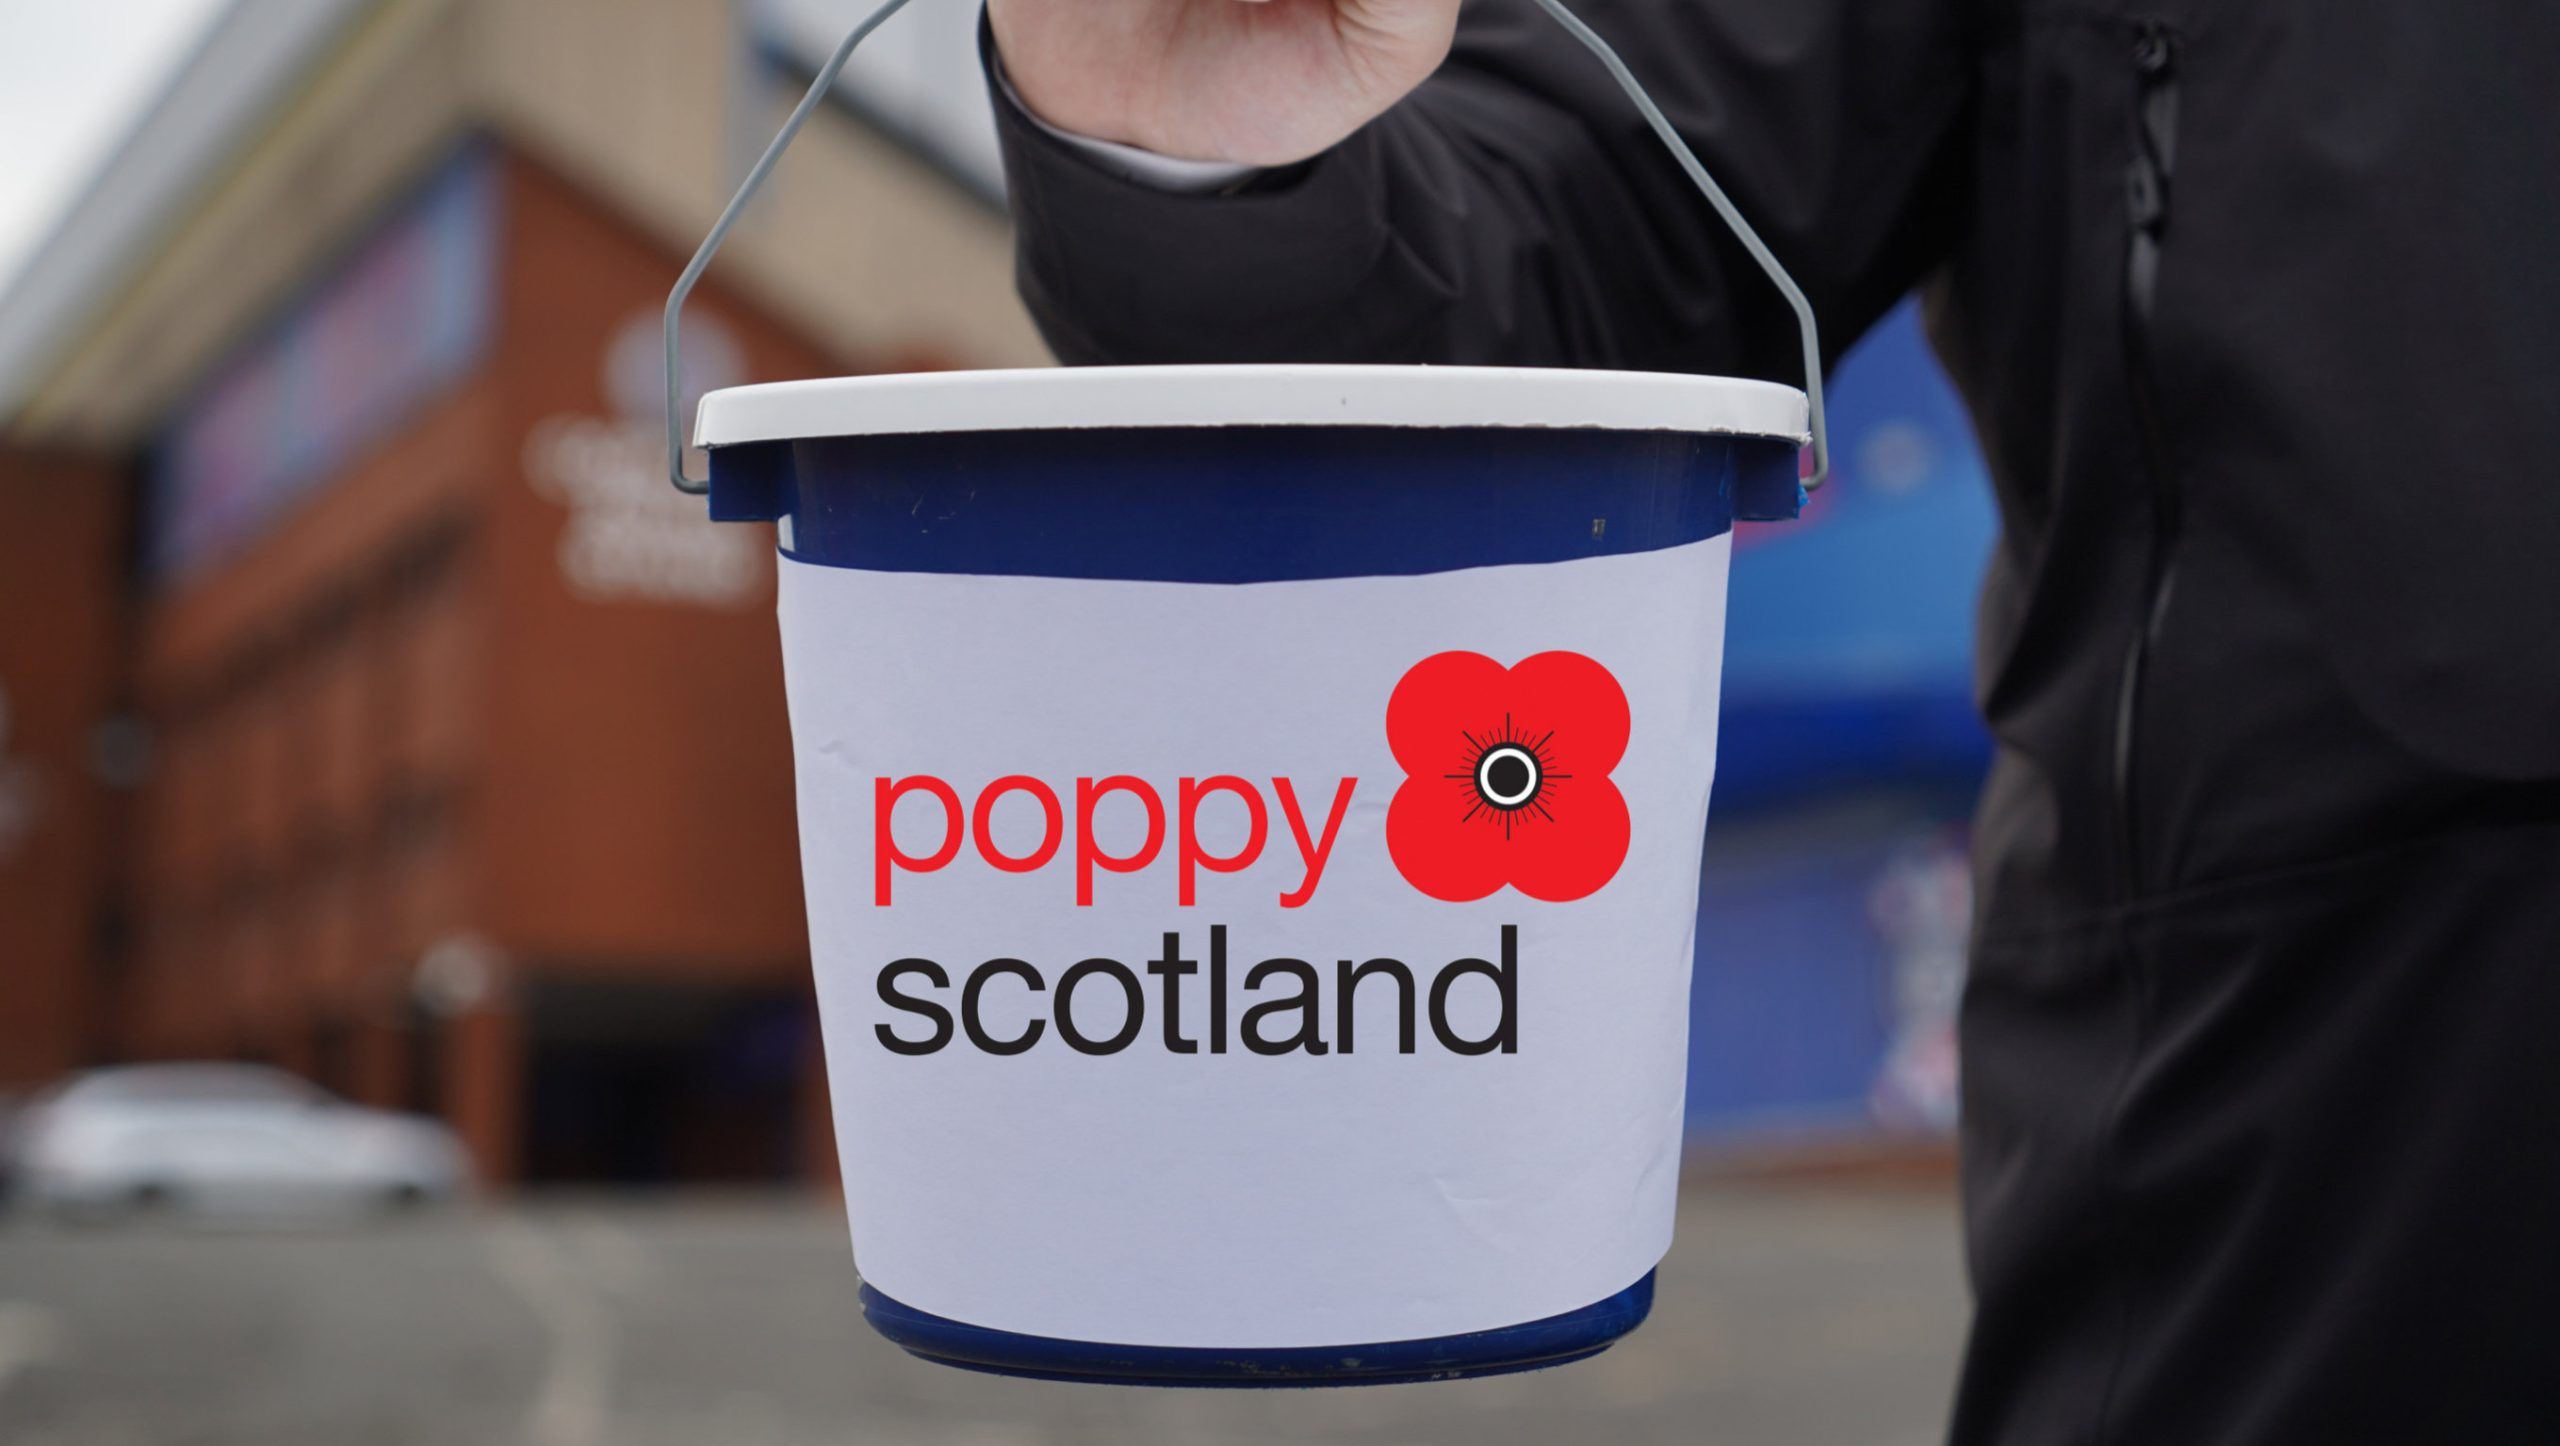 A bucket with the poppy Scotland logo